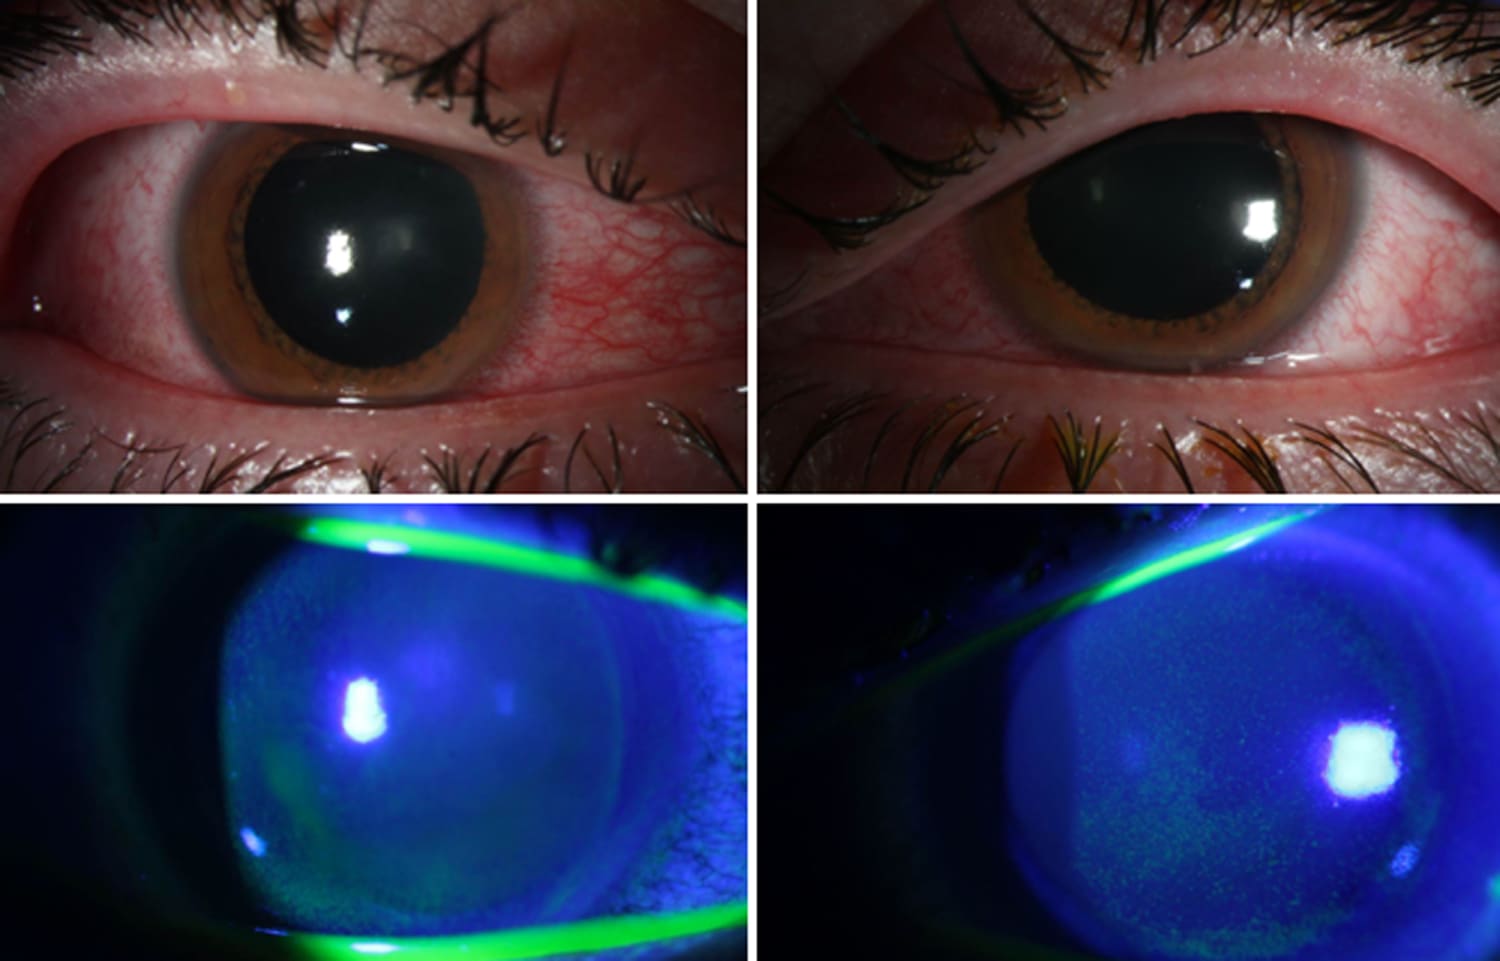 Doctors Warn About Eye Damage From Uv Lights To Kill The Coronavirus